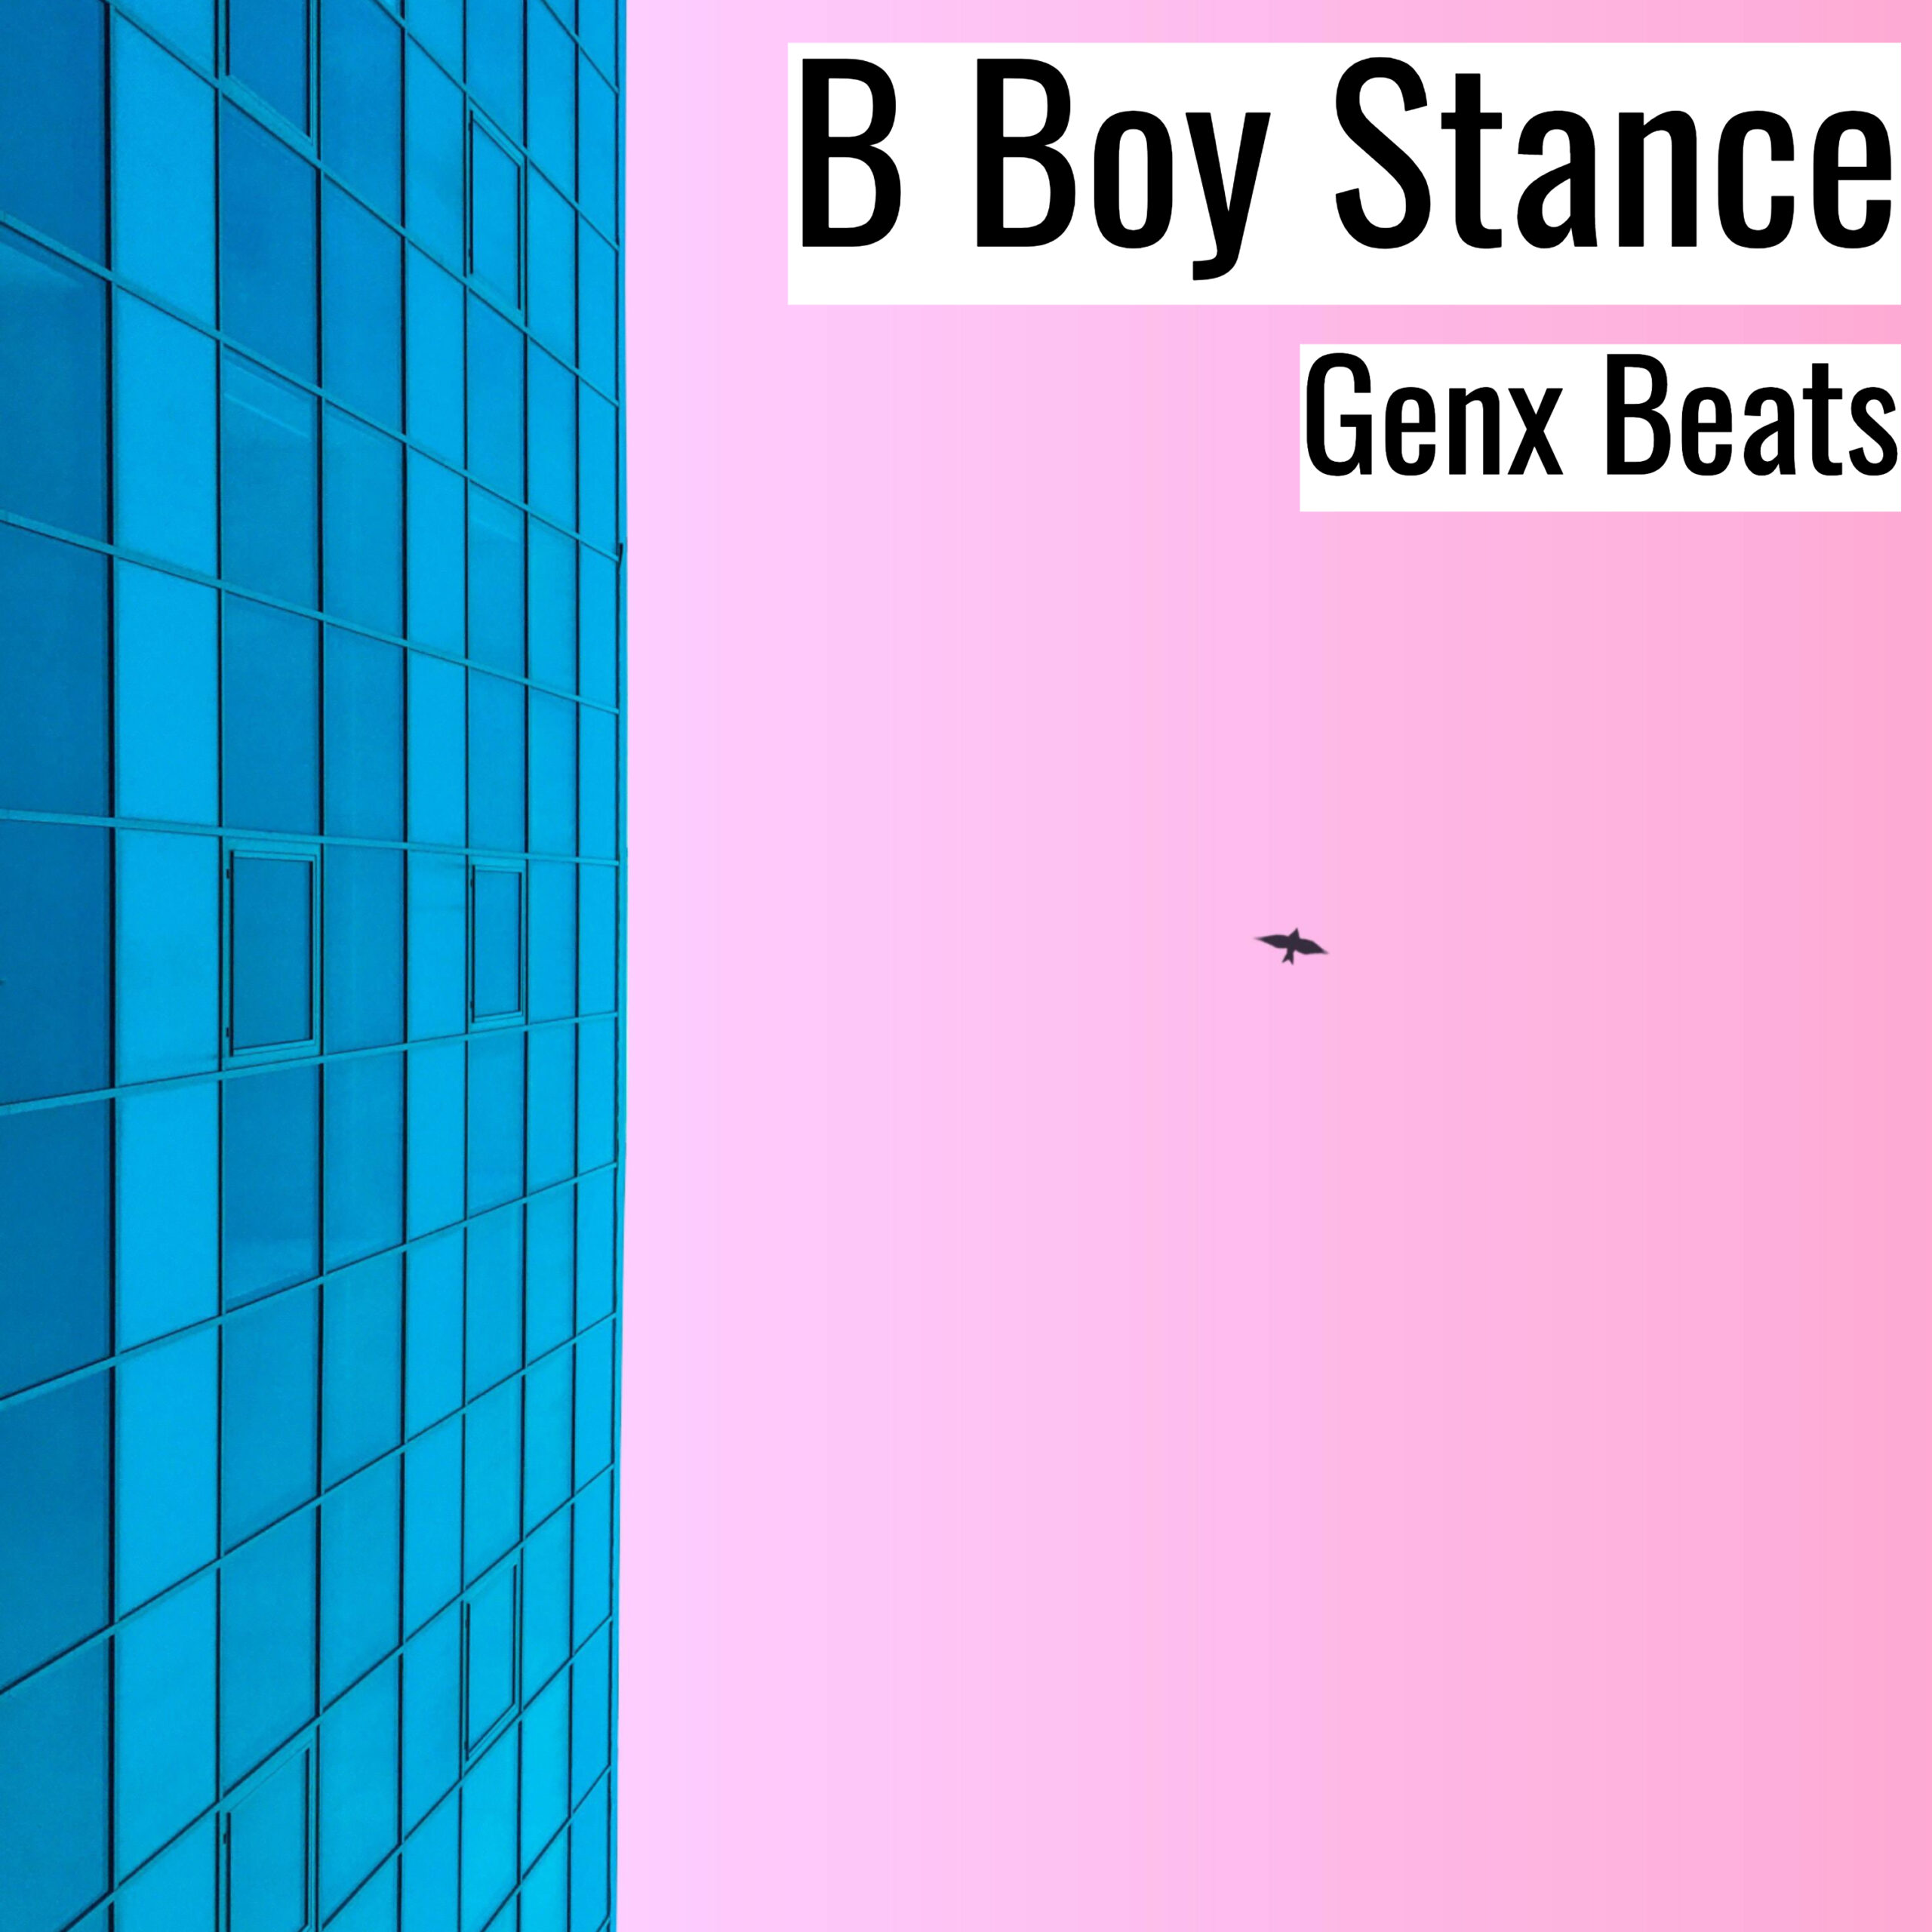 B Boy Stance scaled